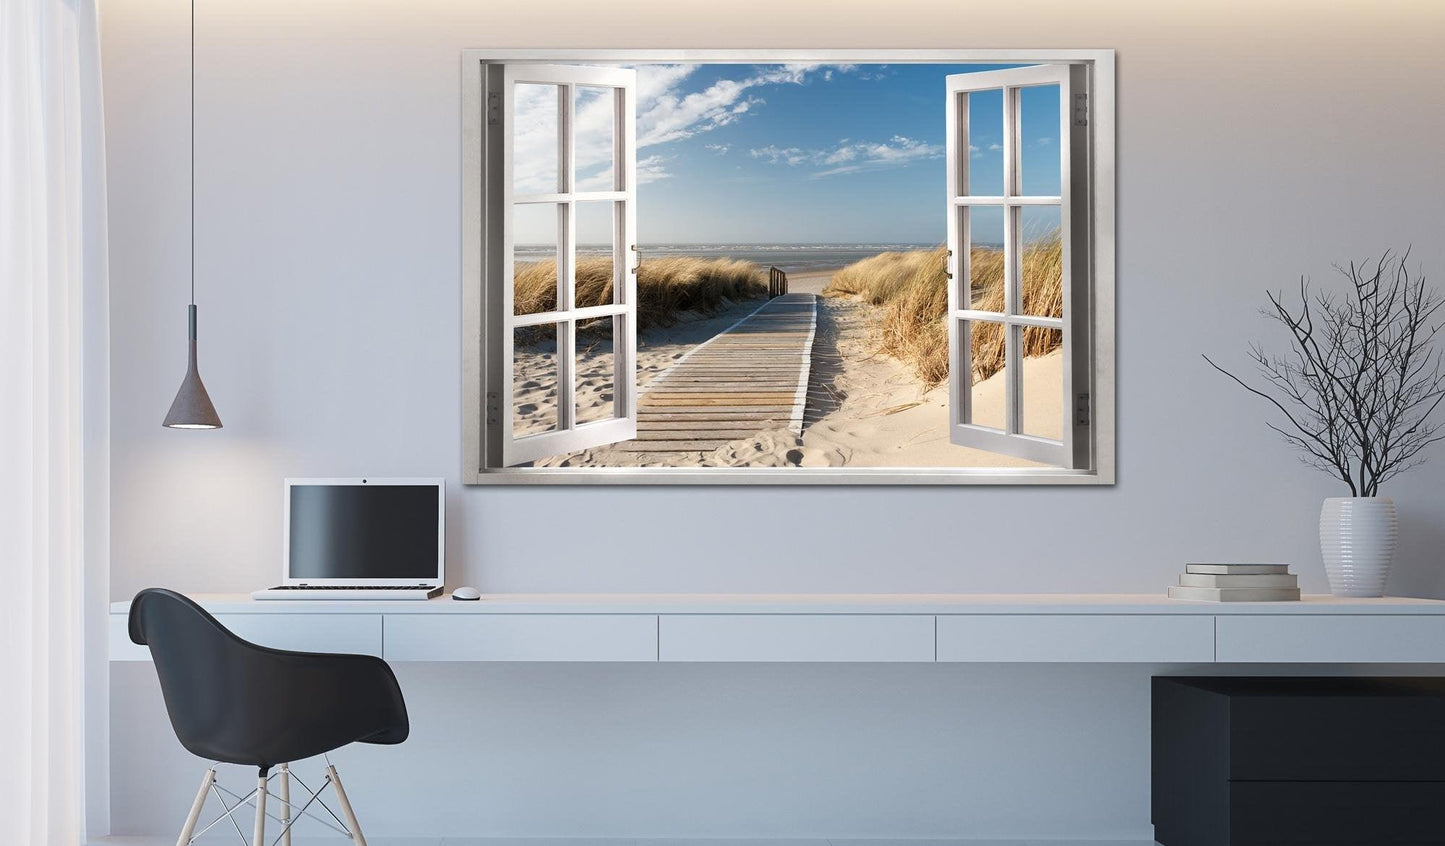 Canvas Print - Window: View of the Beach - www.trendingbestsellers.com